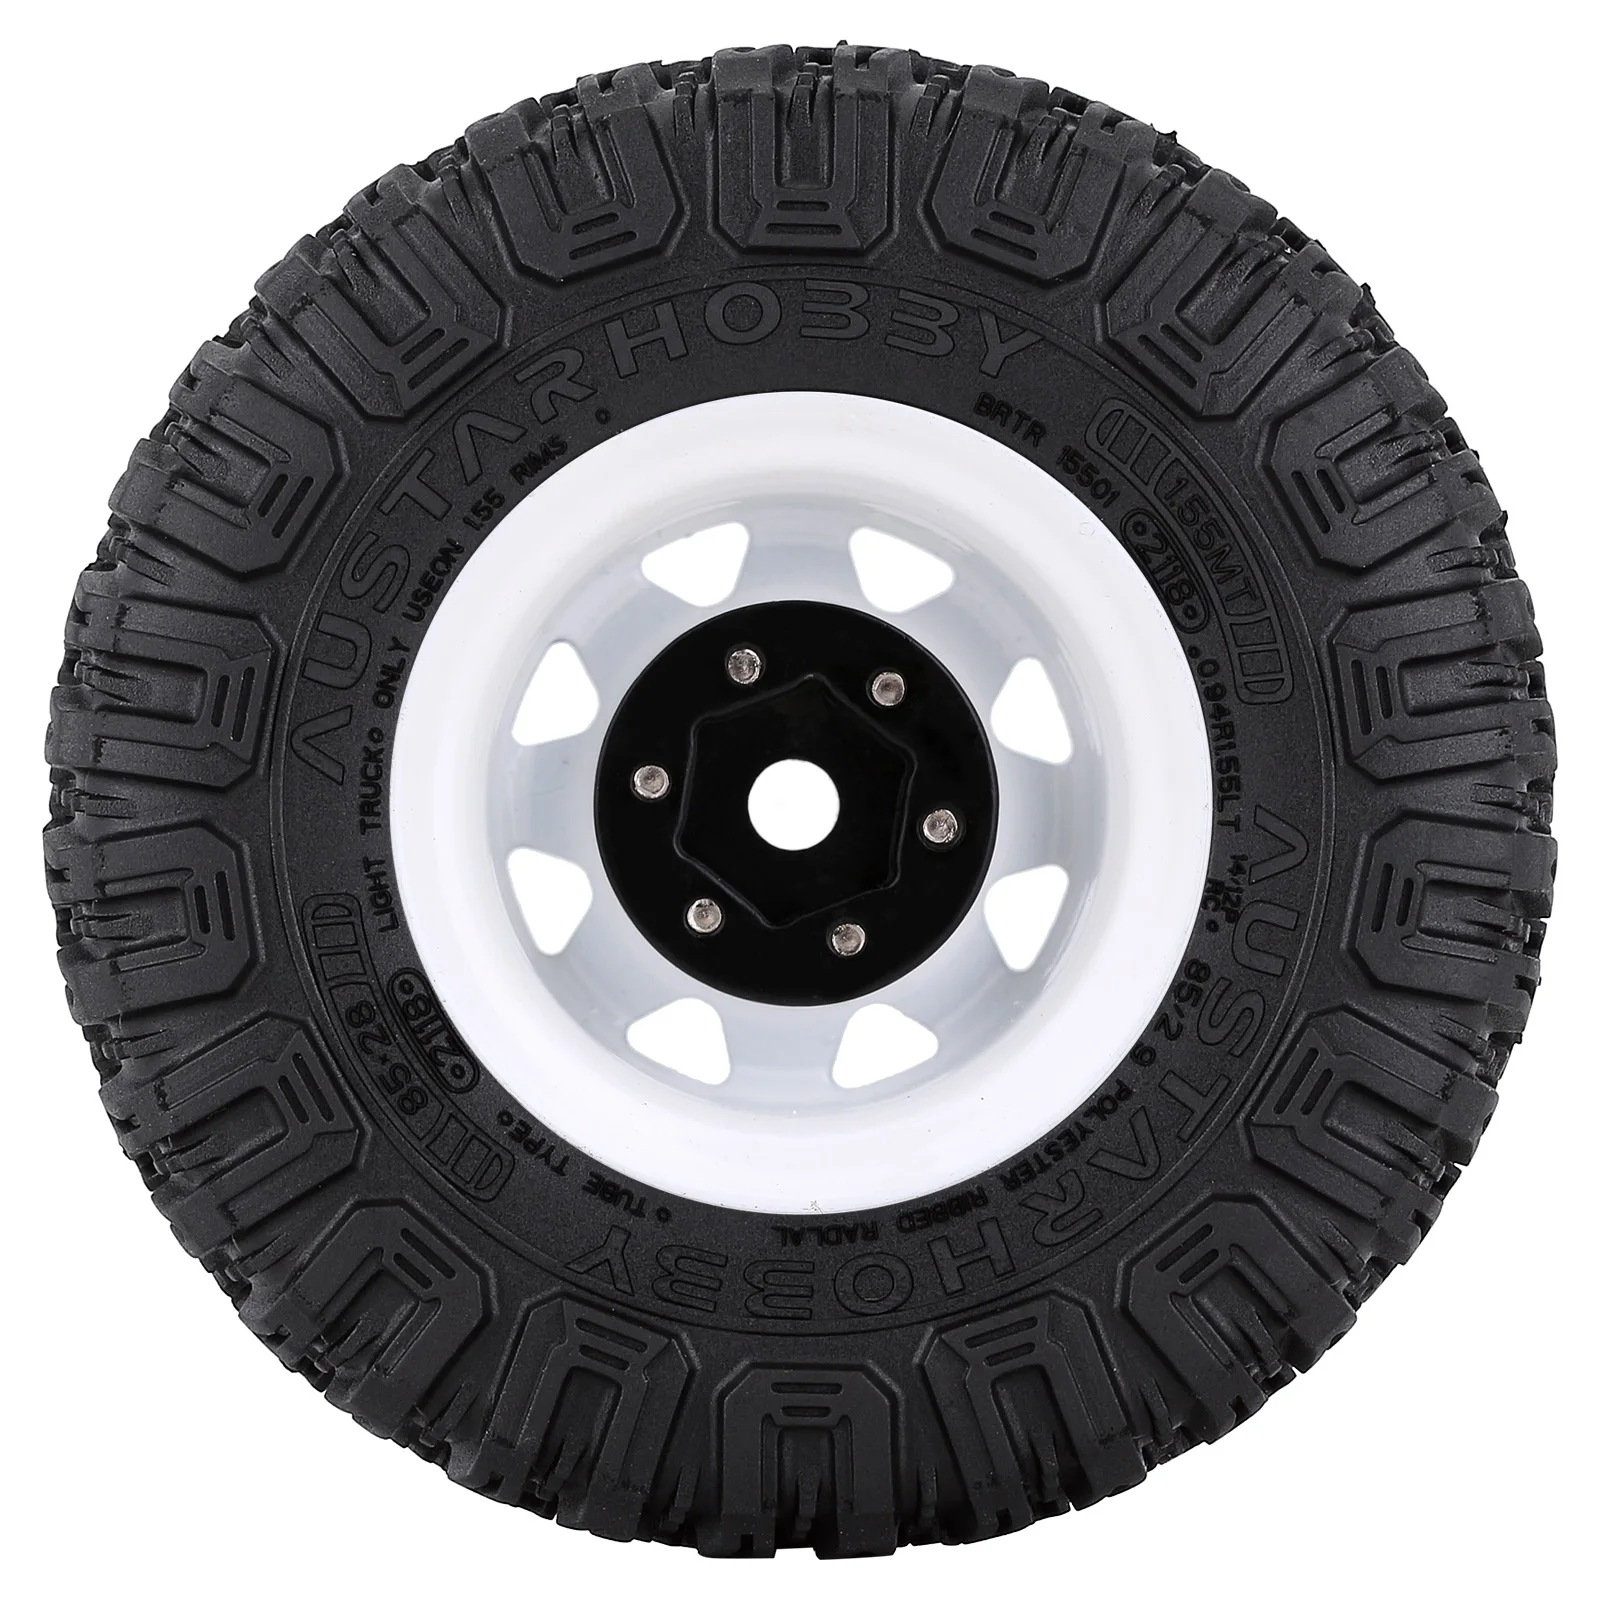 INJORA RC 1.55 Crawler Tires and Wheels Metal Wheel Rims Tires Set for RC Crawler Car Axial AX90069 Tamiya CC01 LC70 D90 TF2 MST JIMNY Black 